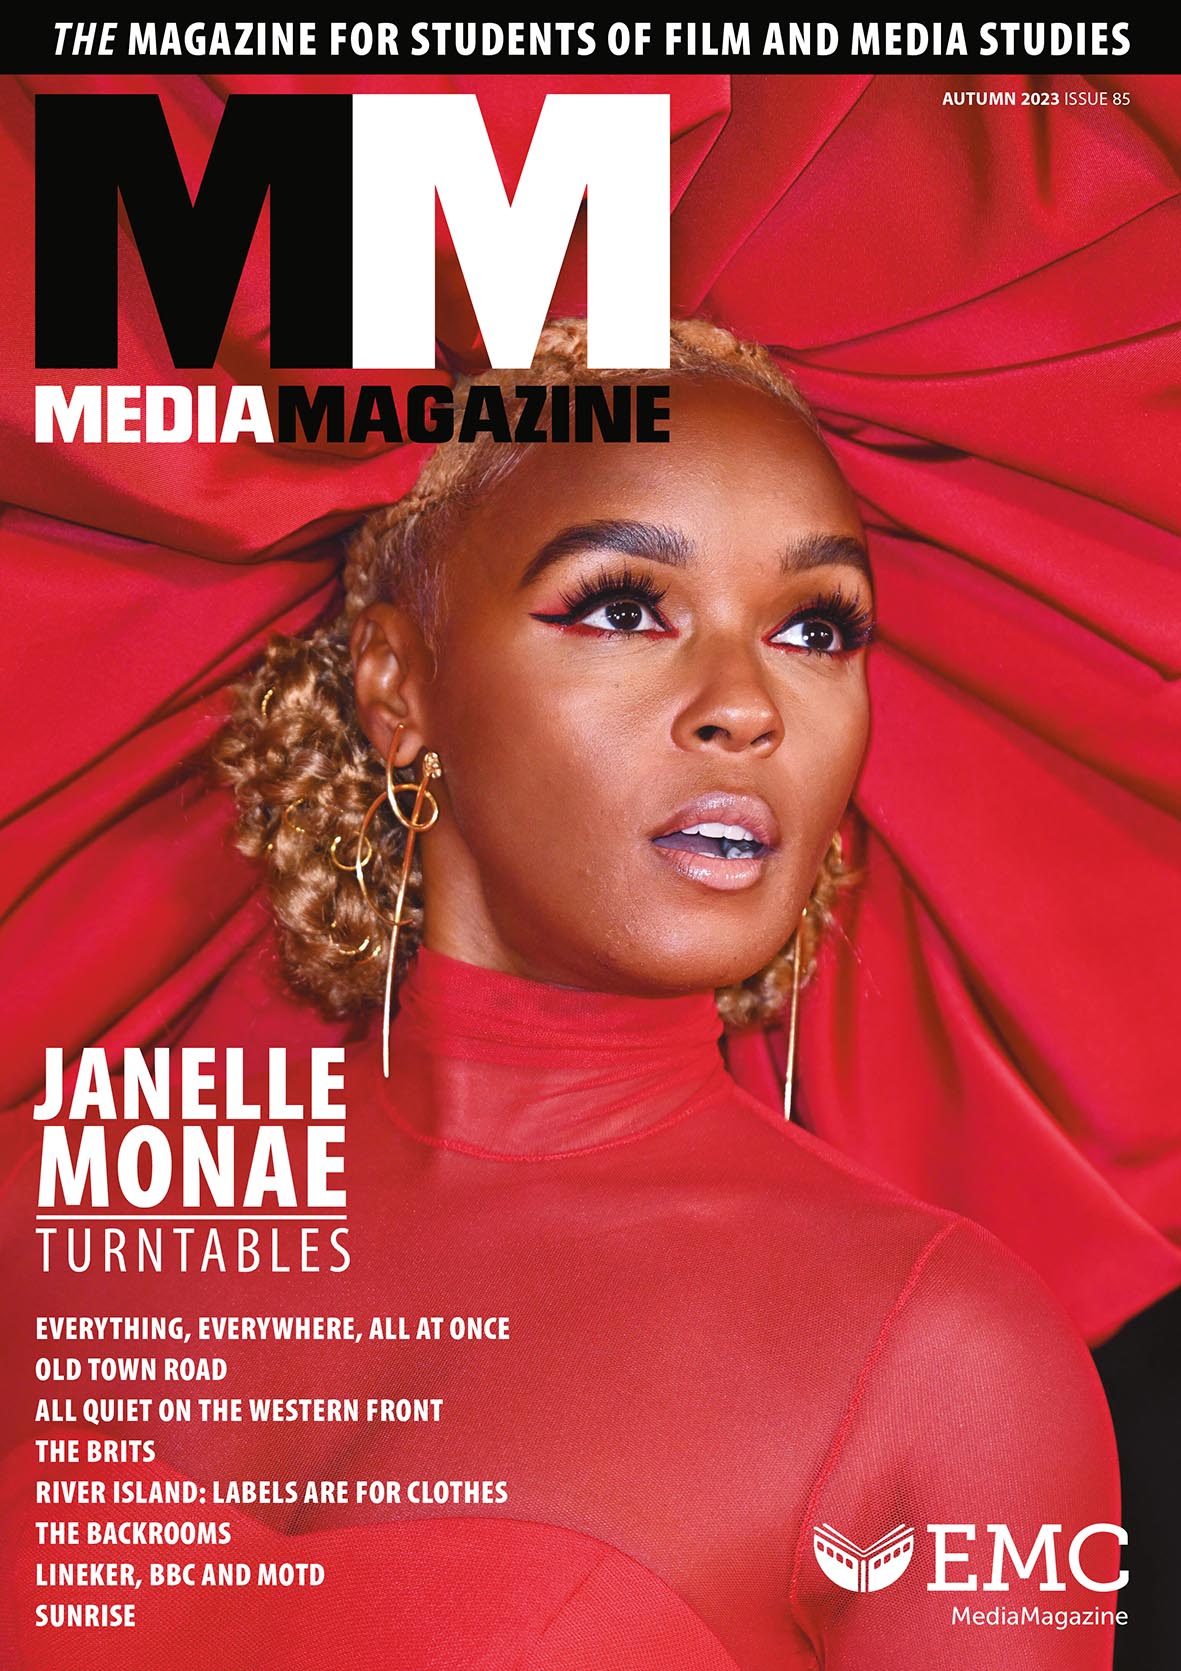 MediaMagazine 85 (September 2023)